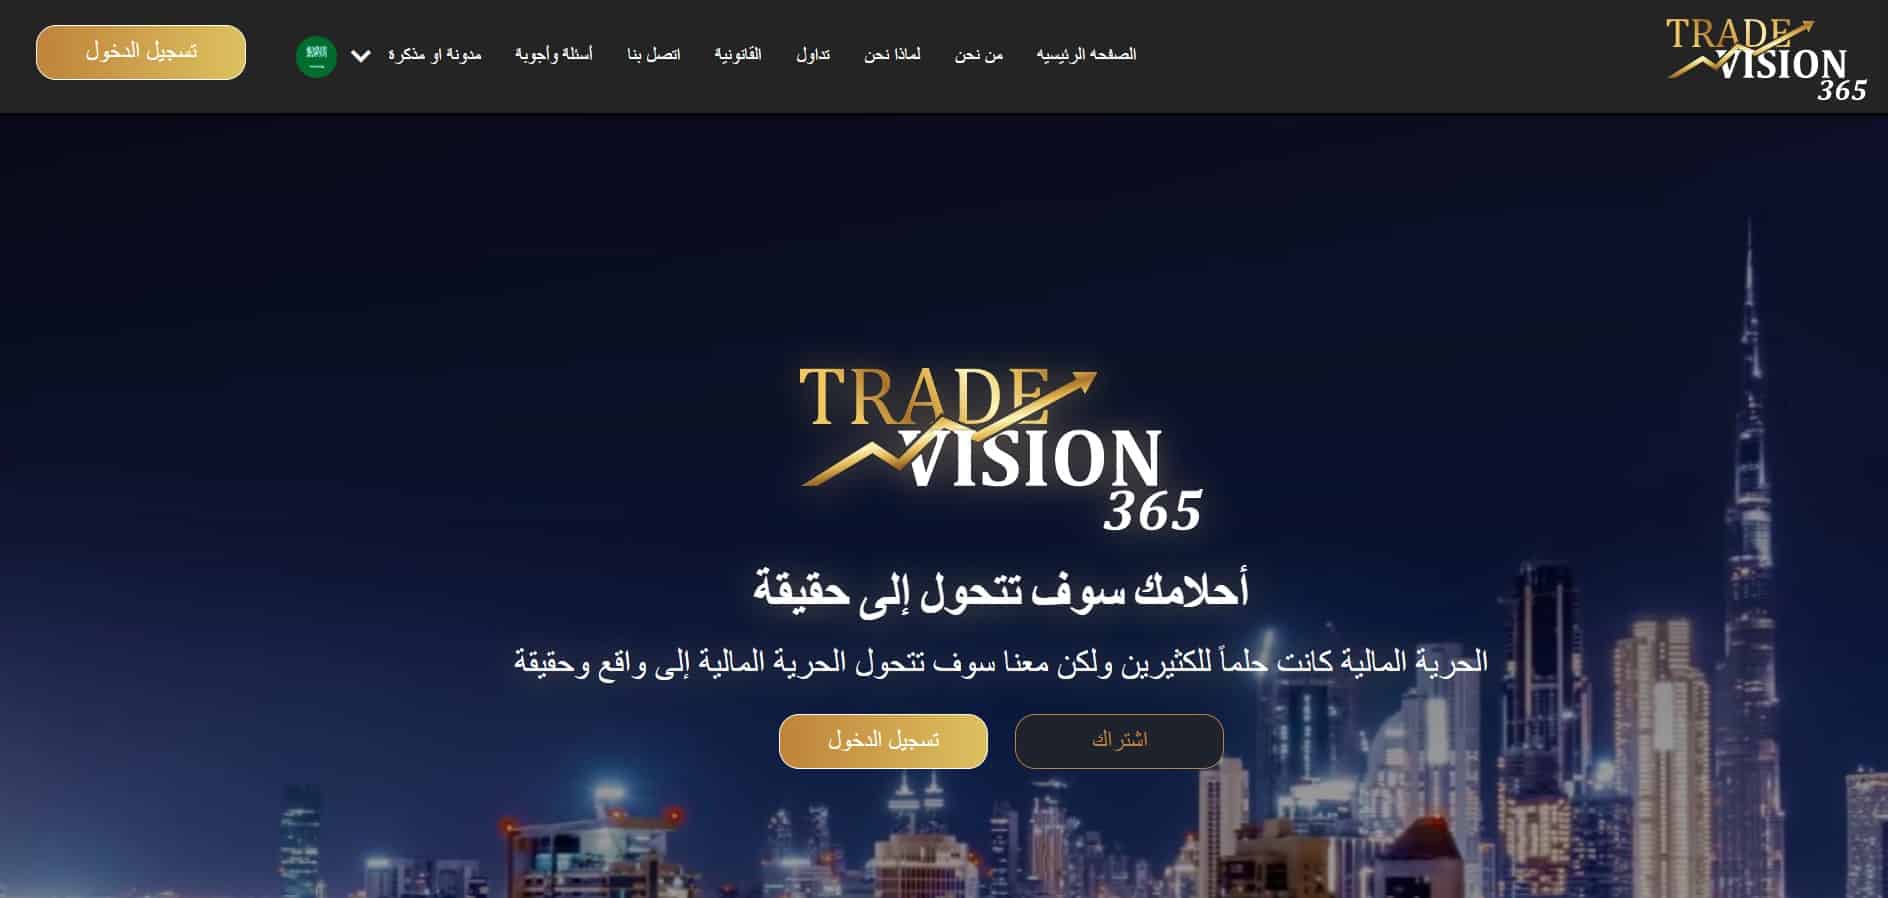 TradeVision365 website